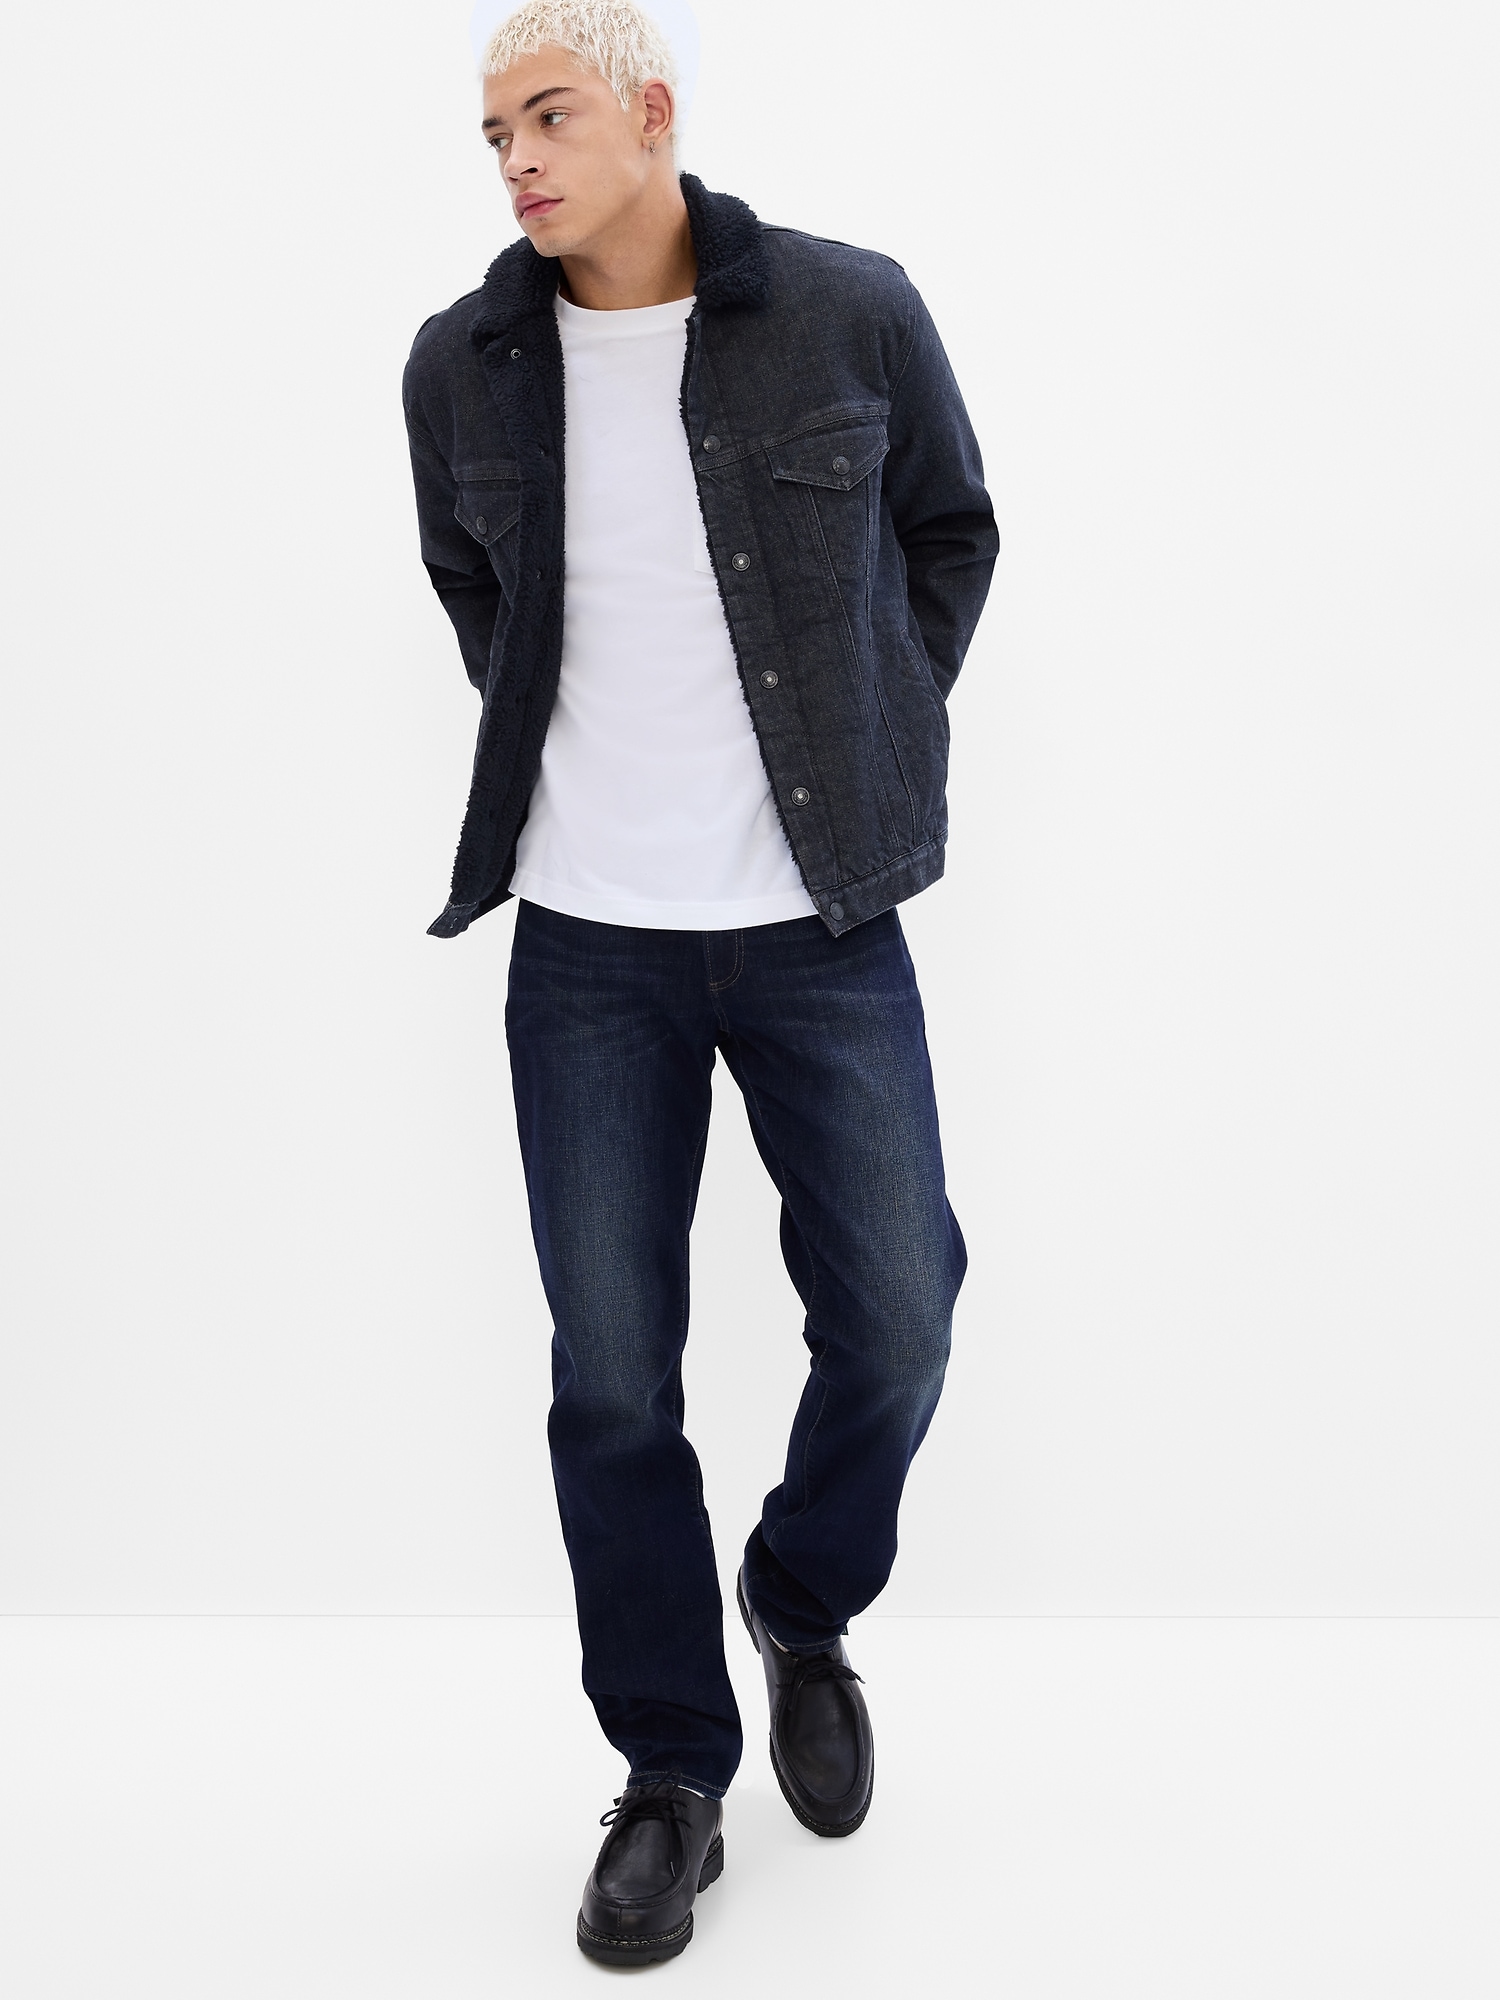 Men's soft wear slim Jeans  Slim jeans, How to wear, Slim